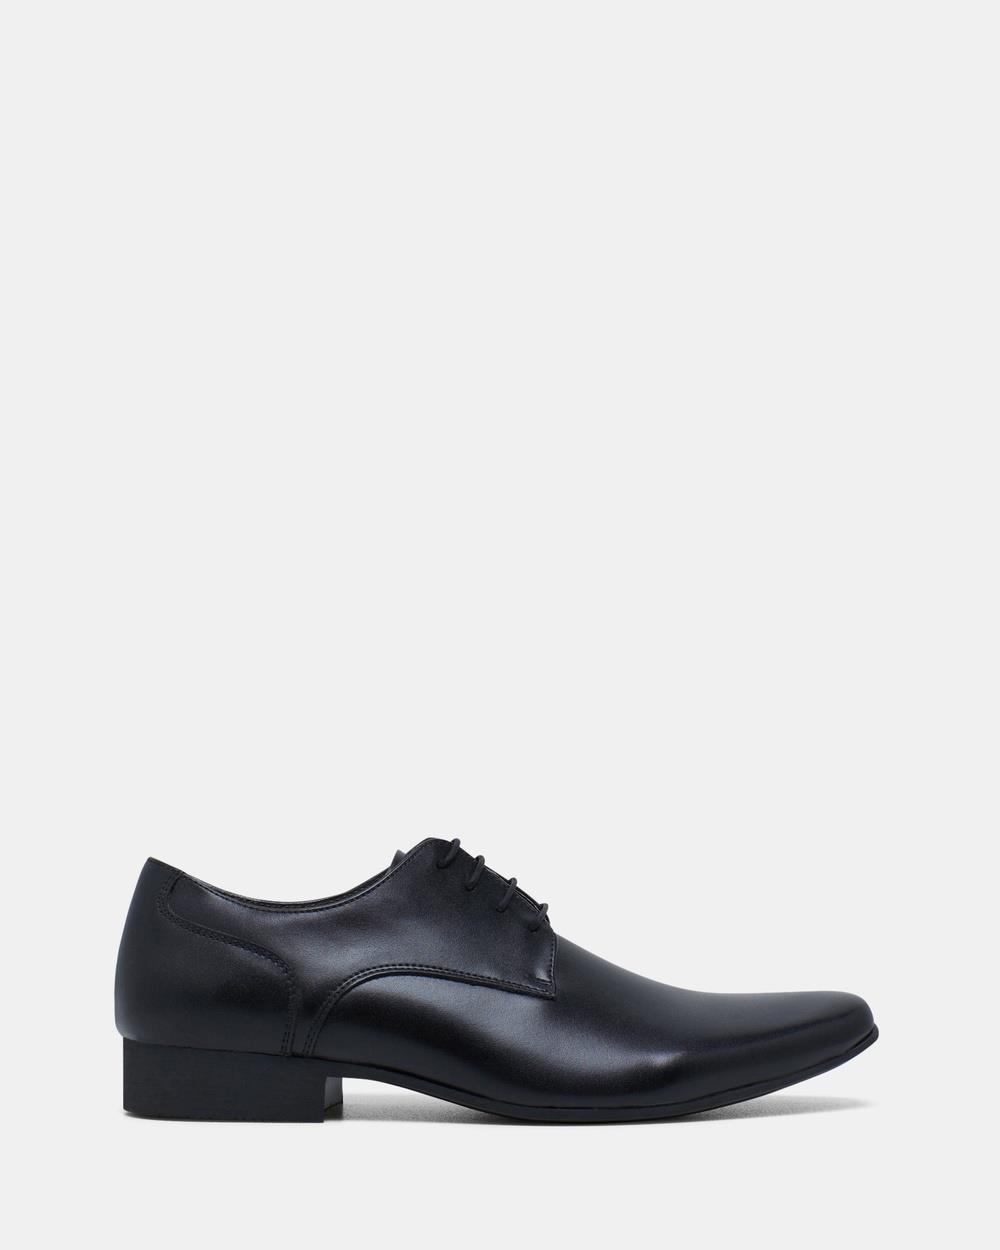 Julius Marlow - Grand - Dress Shoes (Black) Grand